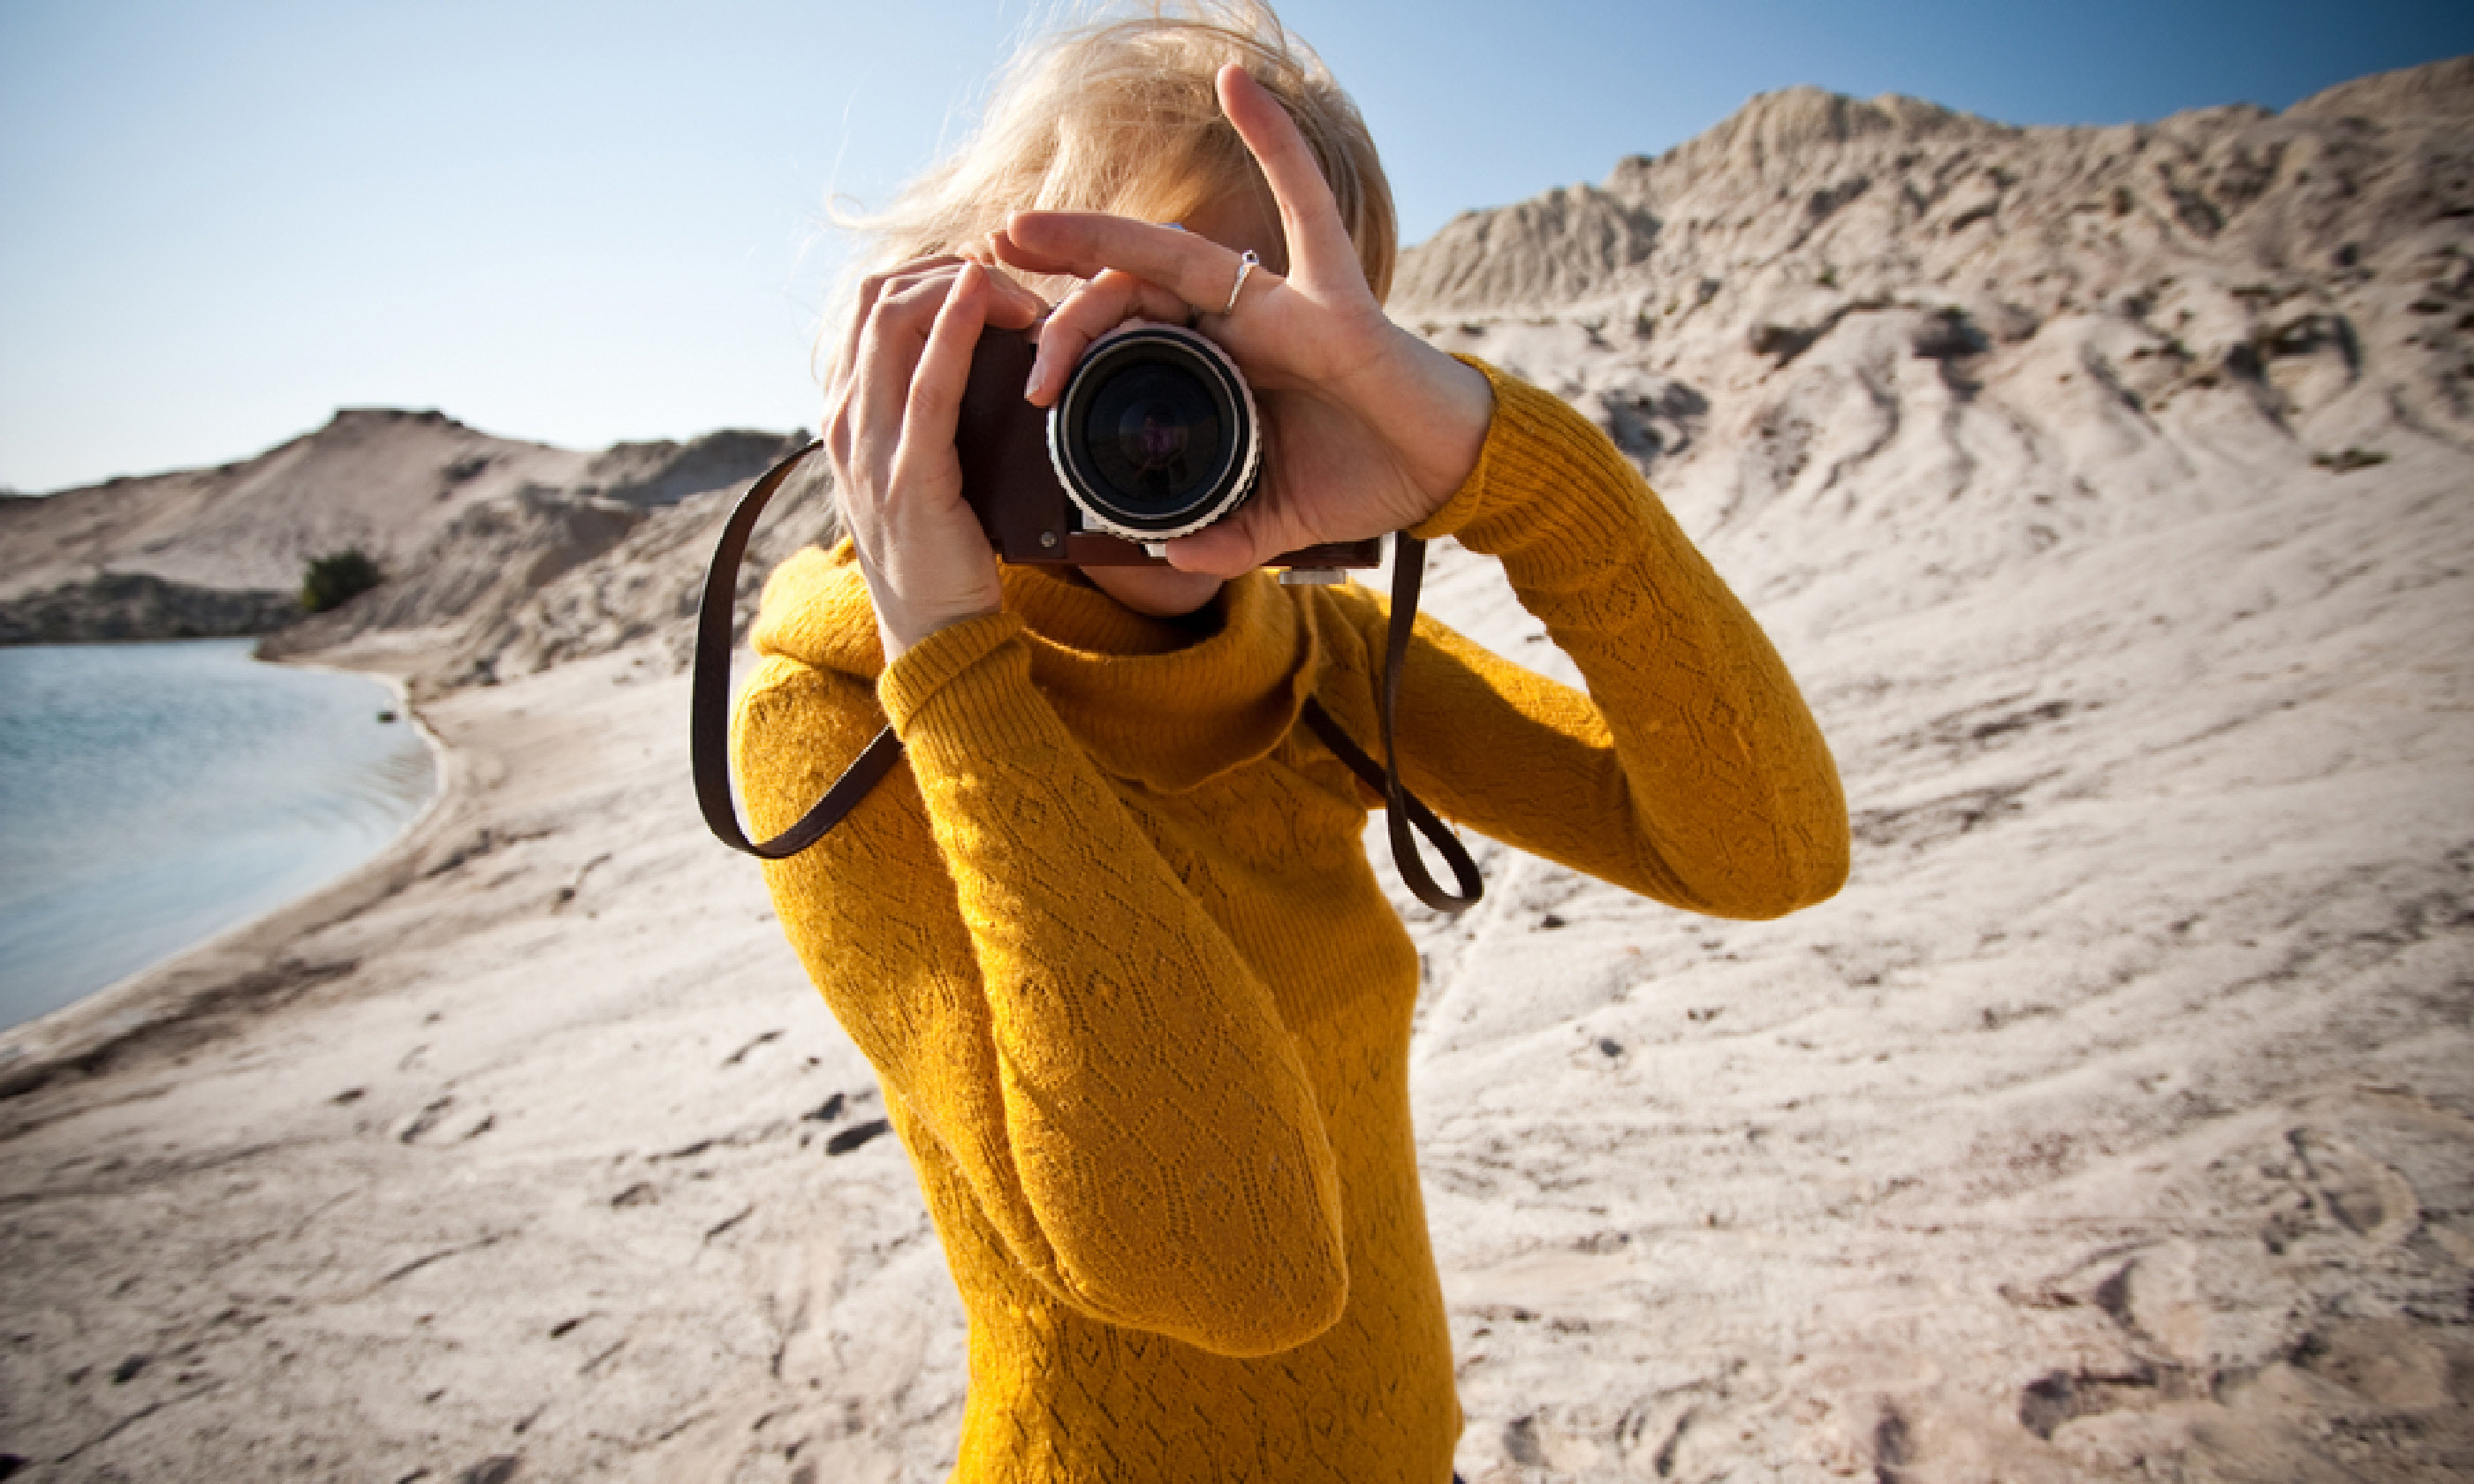 Taking photos in the desert (Shutterstock: see credit below)